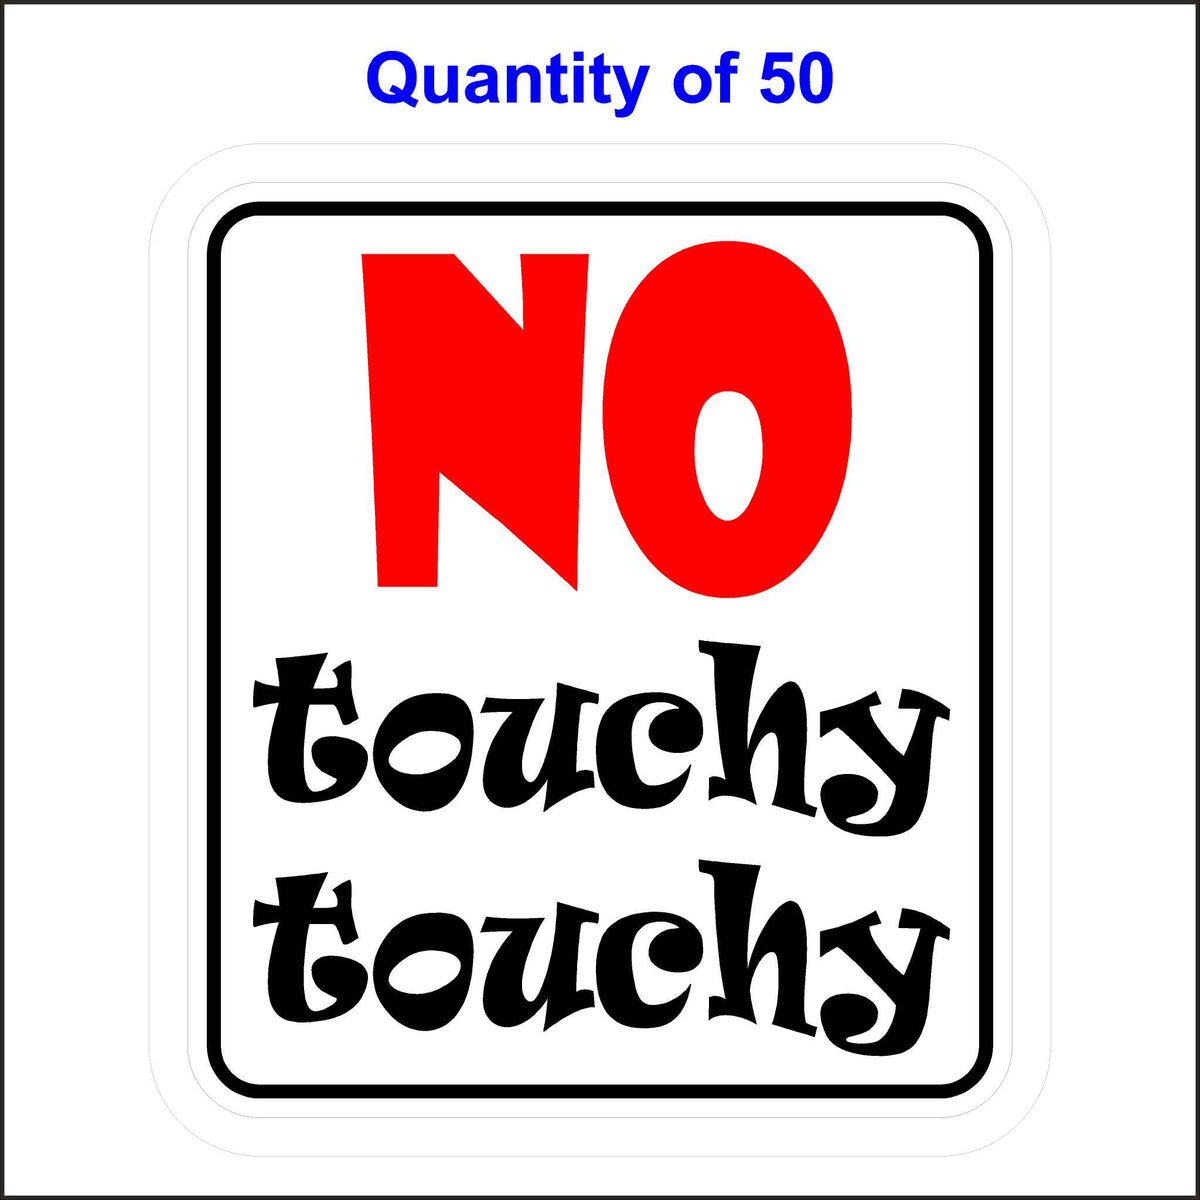 No Touchy Touchy Sticker. 50 Quantity.